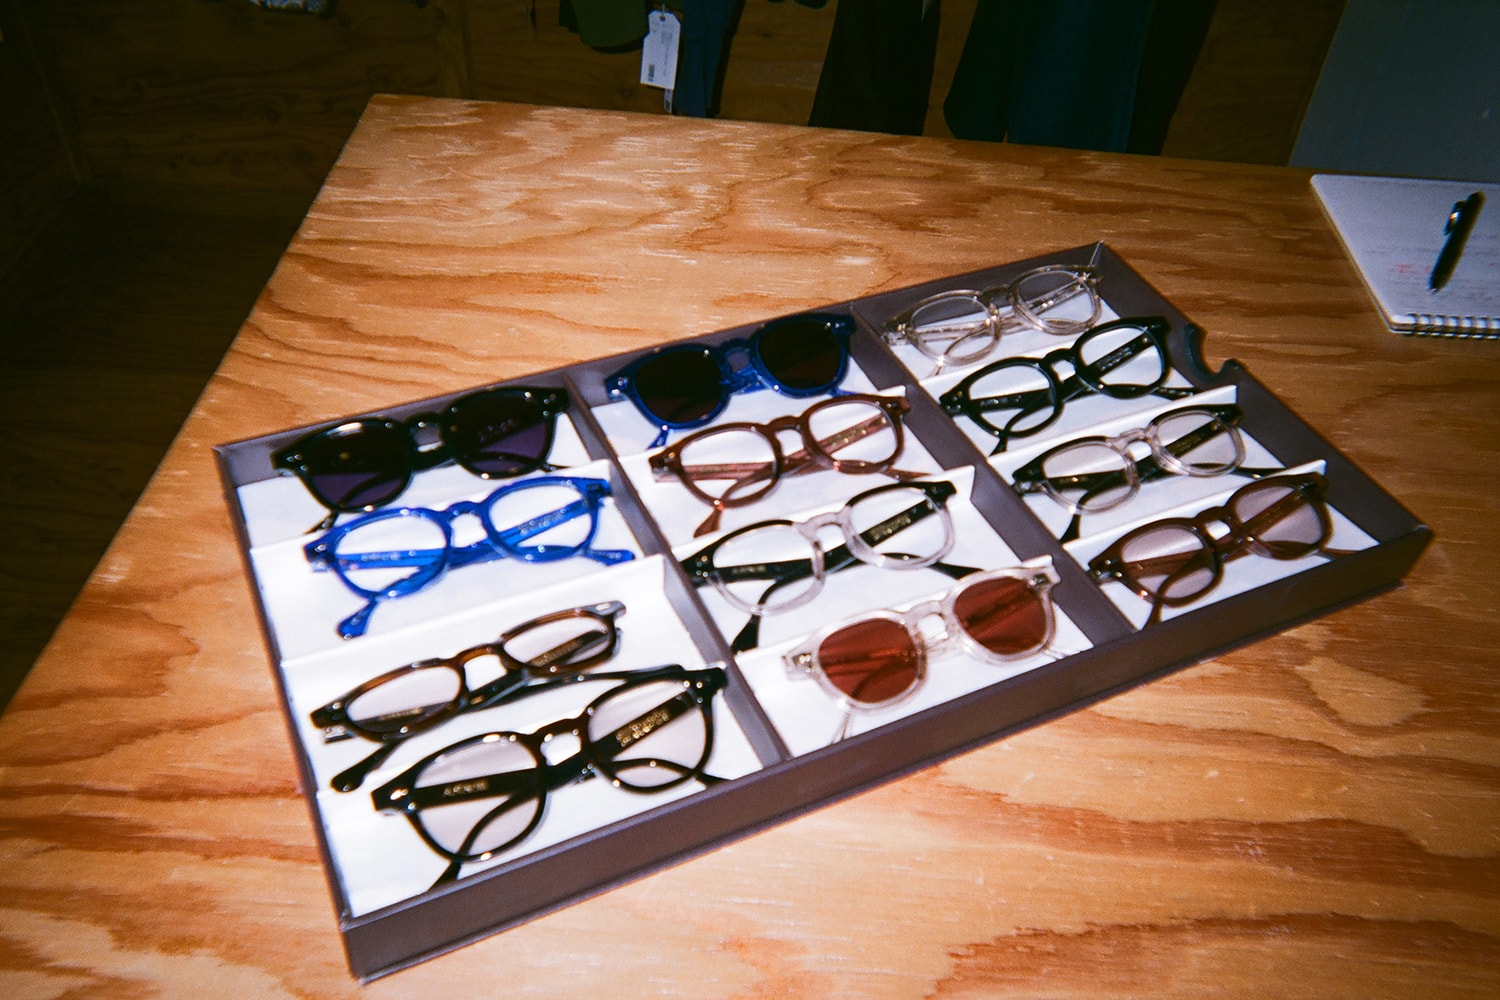 Manual Exposure: Native Sons 主理人 Tommy O’Gara 用鏡頭記錄眼鏡製造的幕後工序